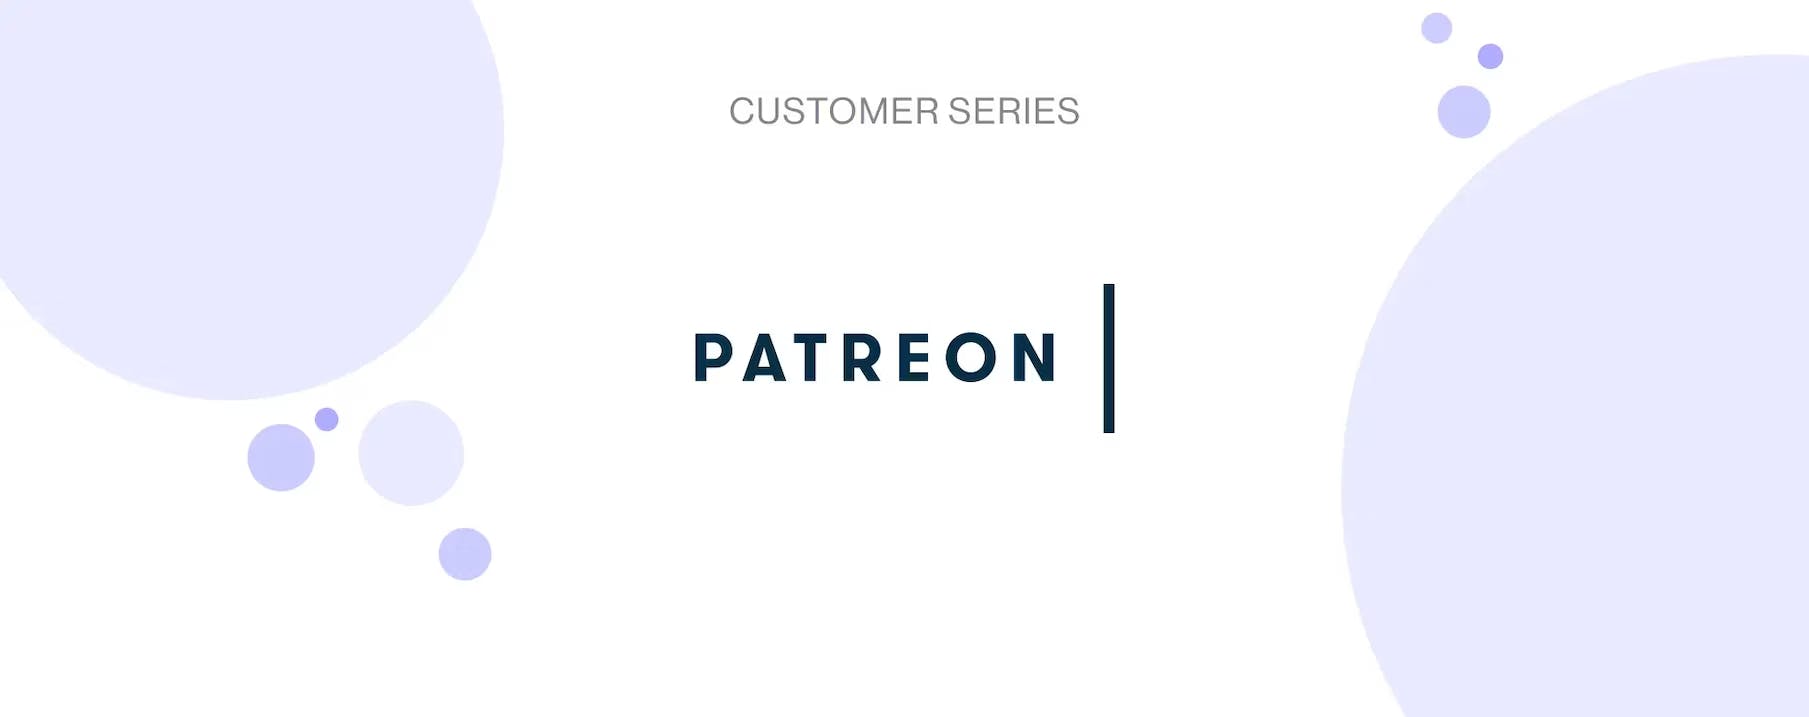 Patreon customer series image